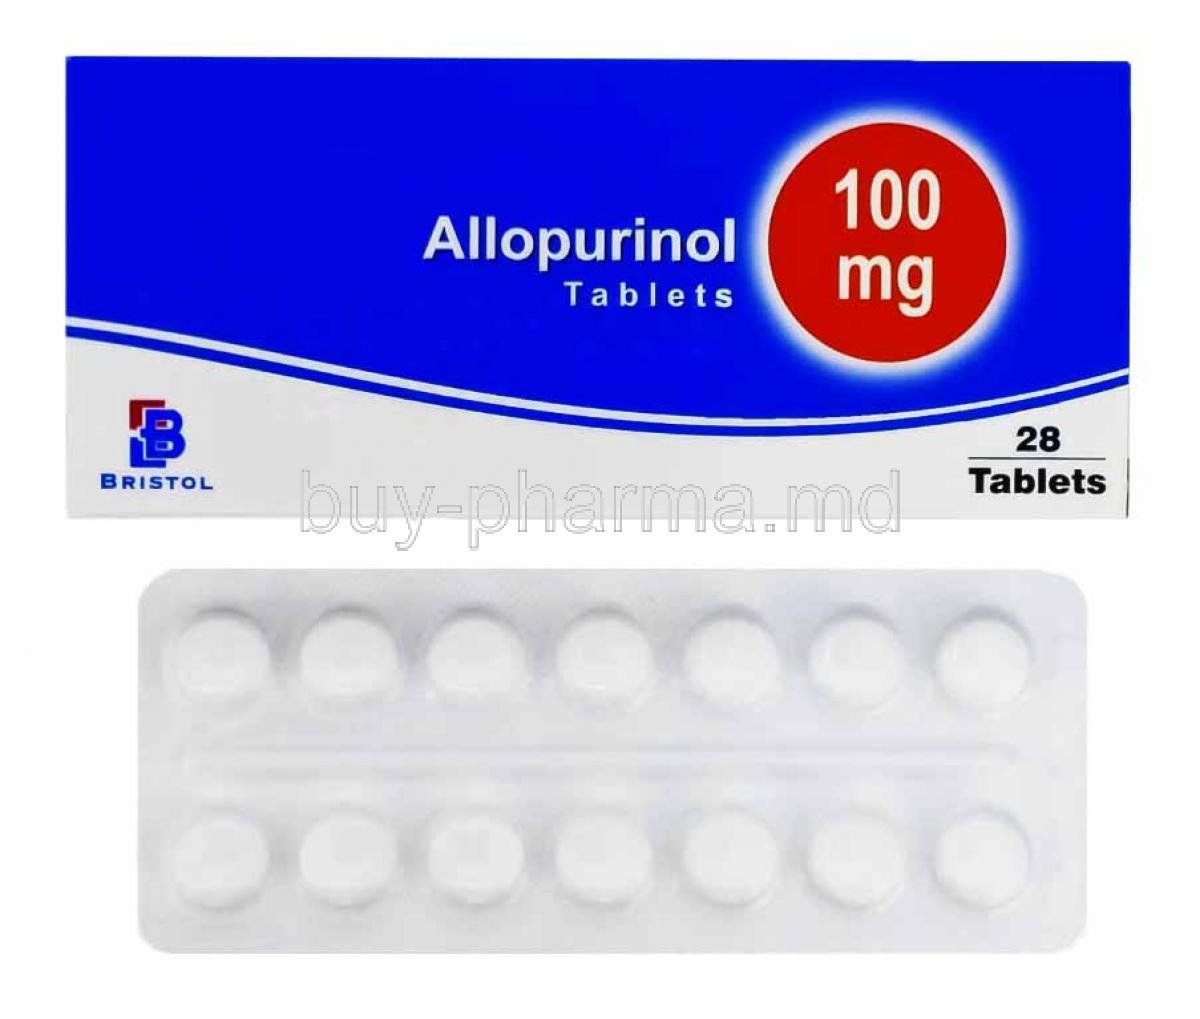 Allopurinol, 100mg box and tablets